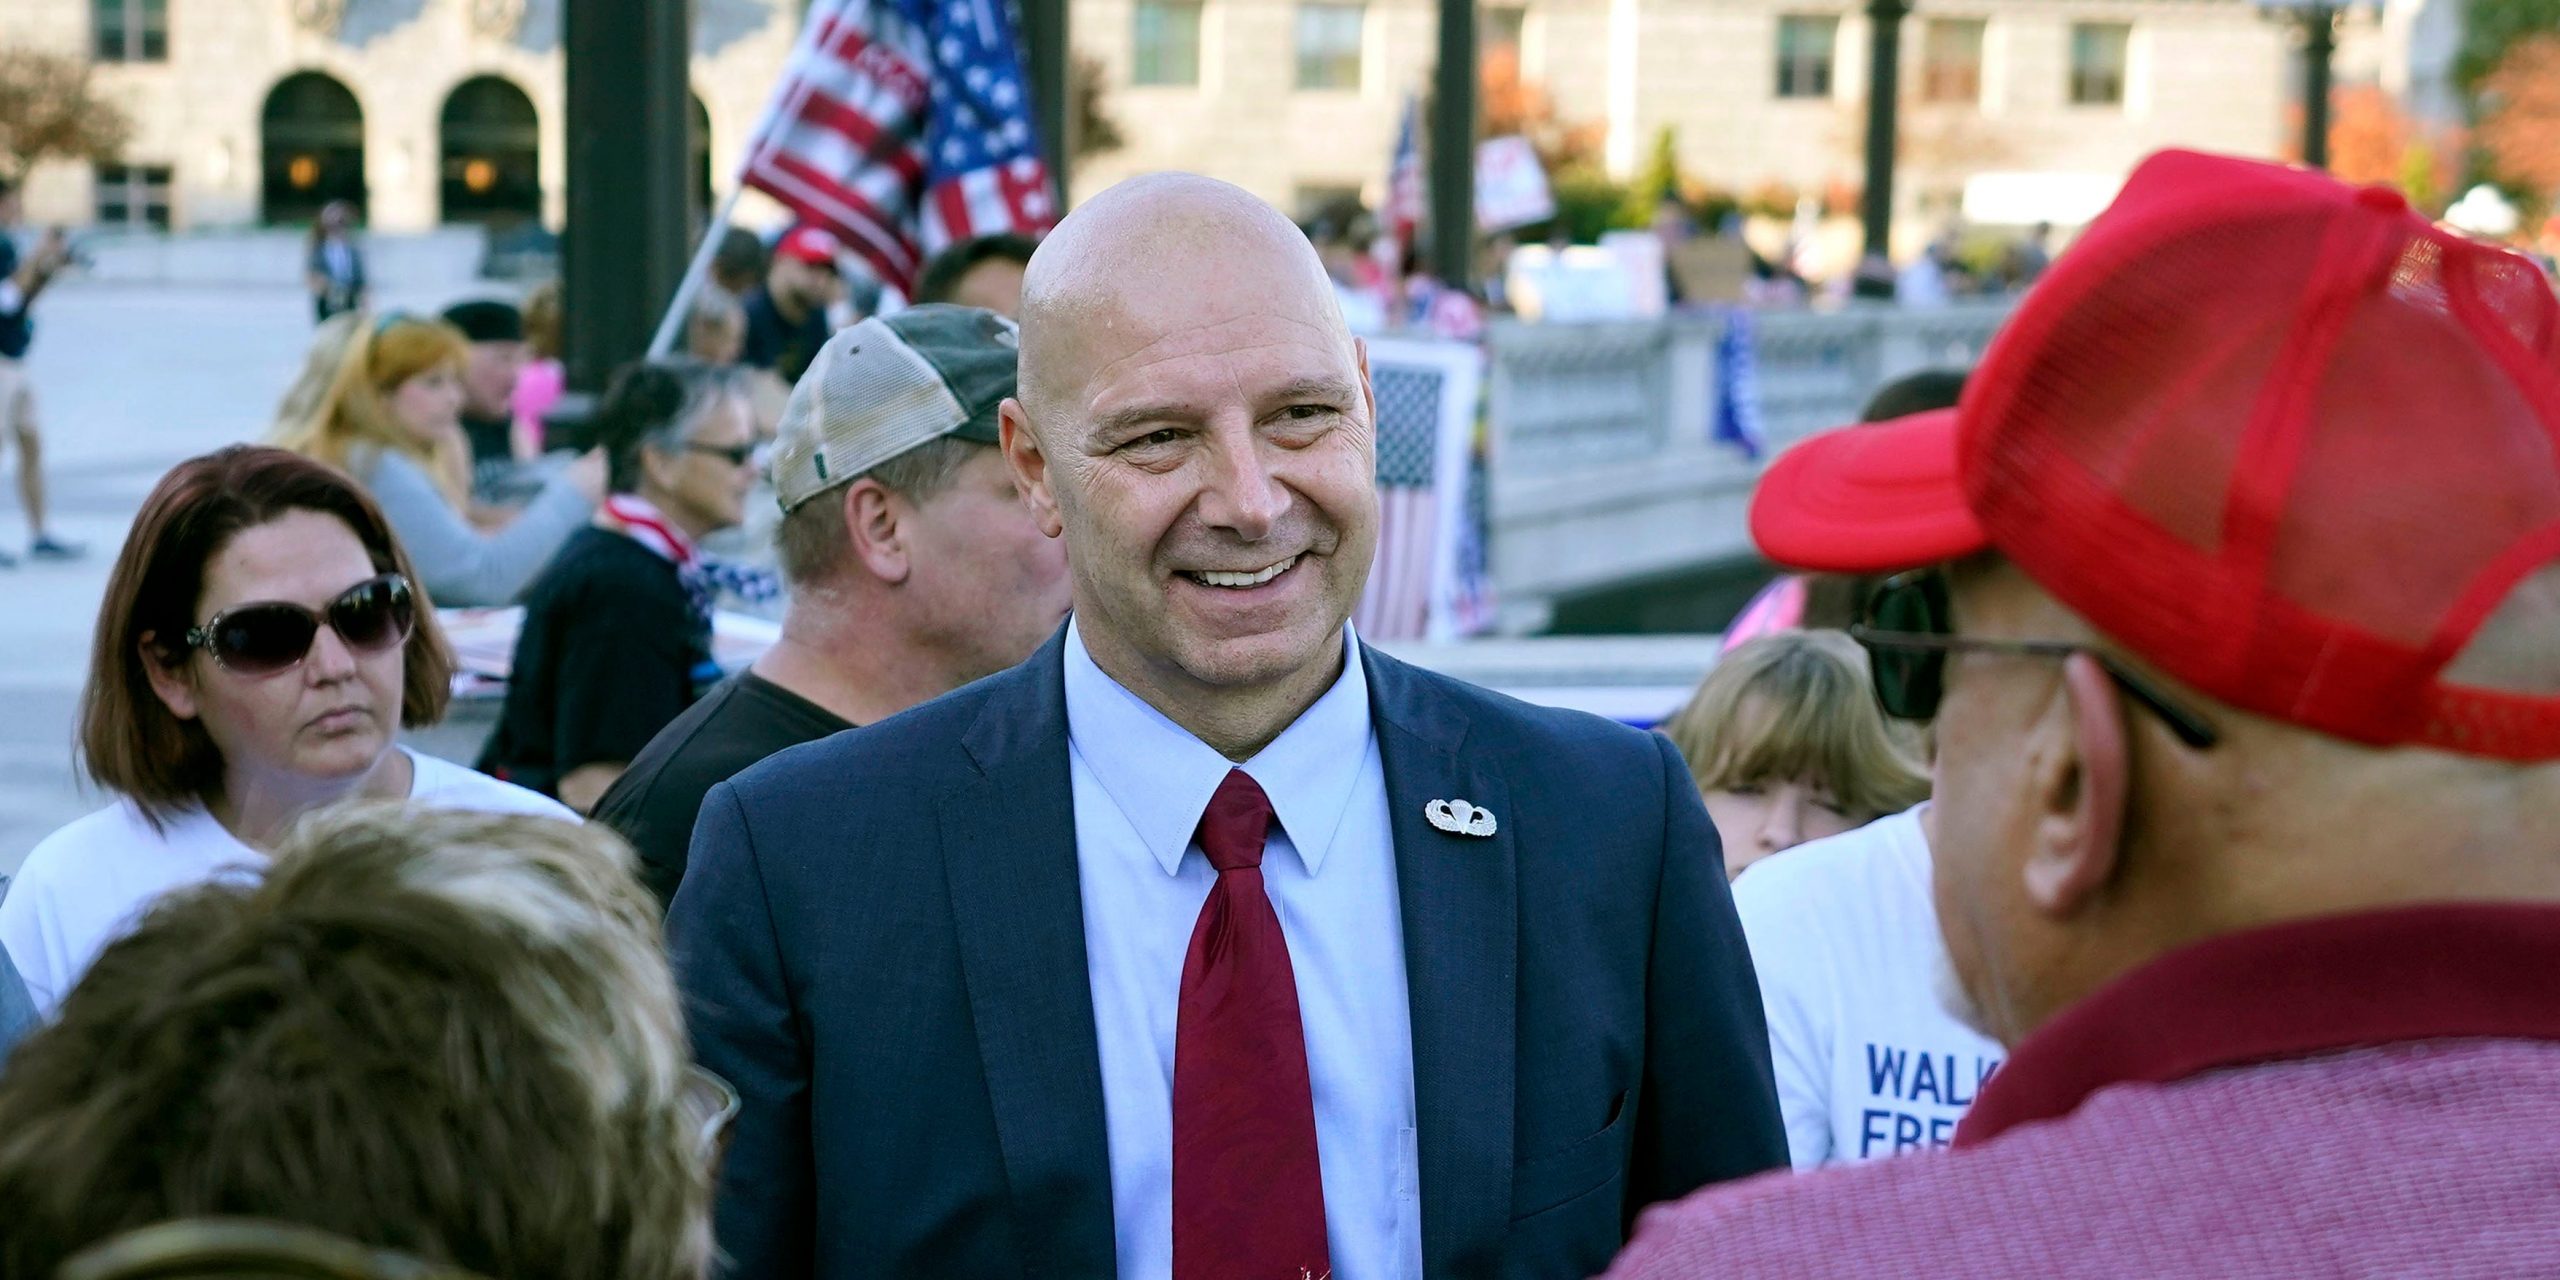 Pennsylvania state Sen. Doug Mastriano smiles in a suit